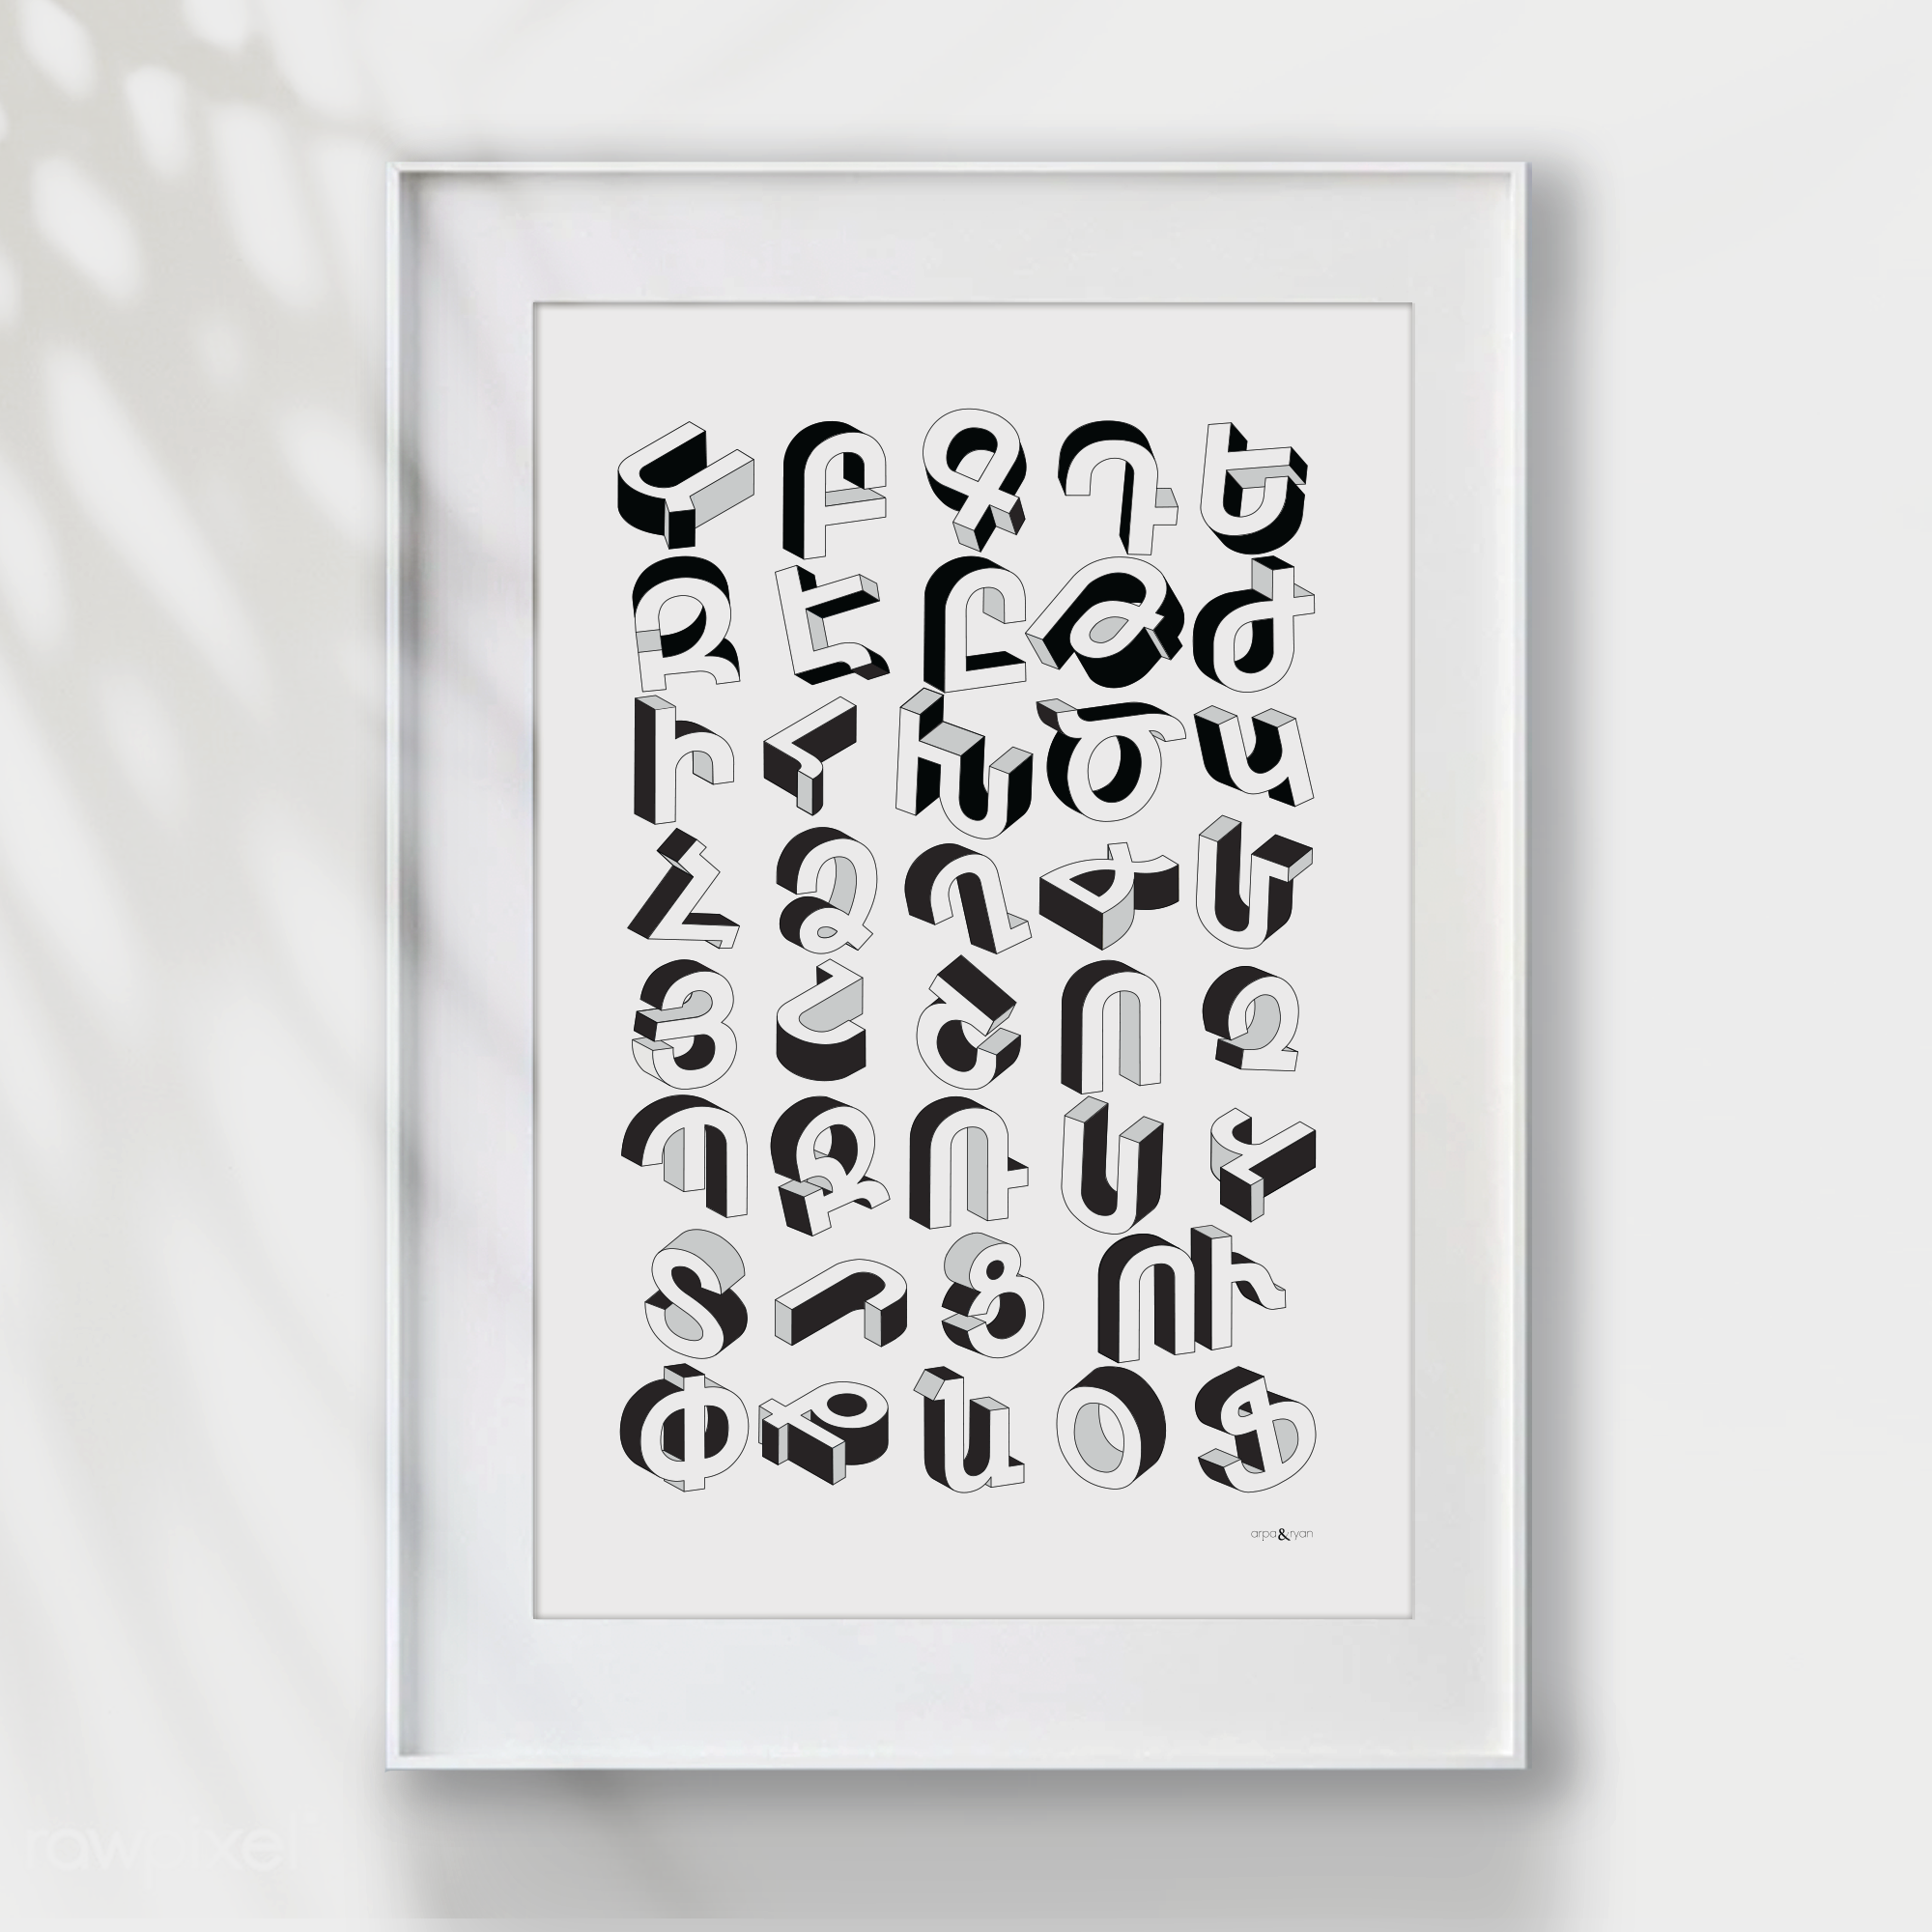 Oorfa - Armenian Alphabet